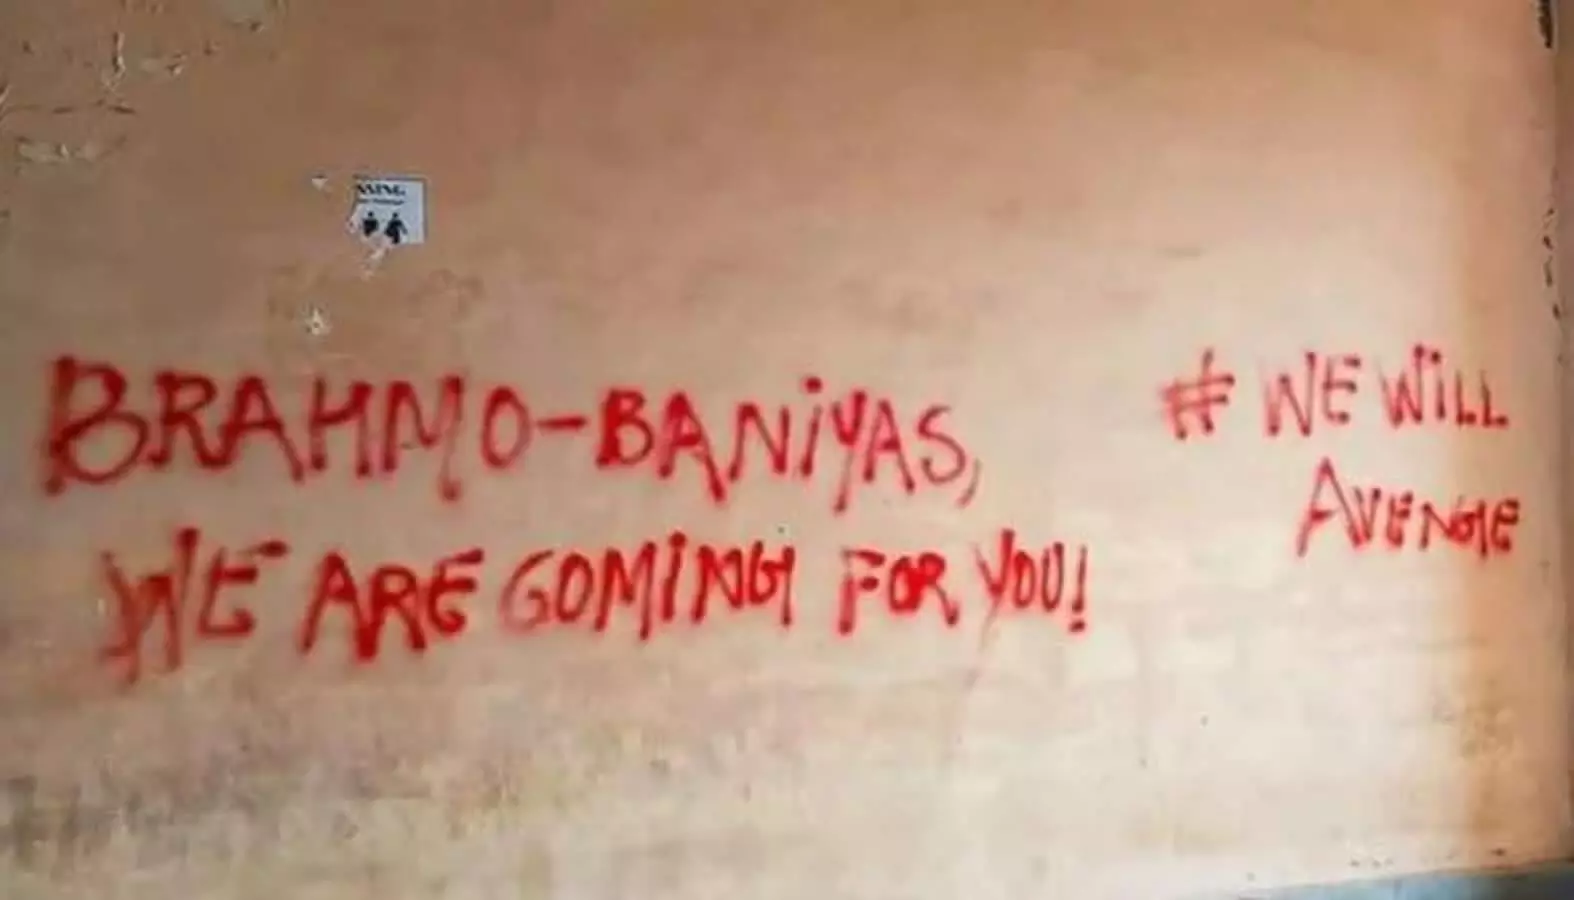 jnu row anti brahmin baniya slogans in jnu campus walls complaint raised with delhi police